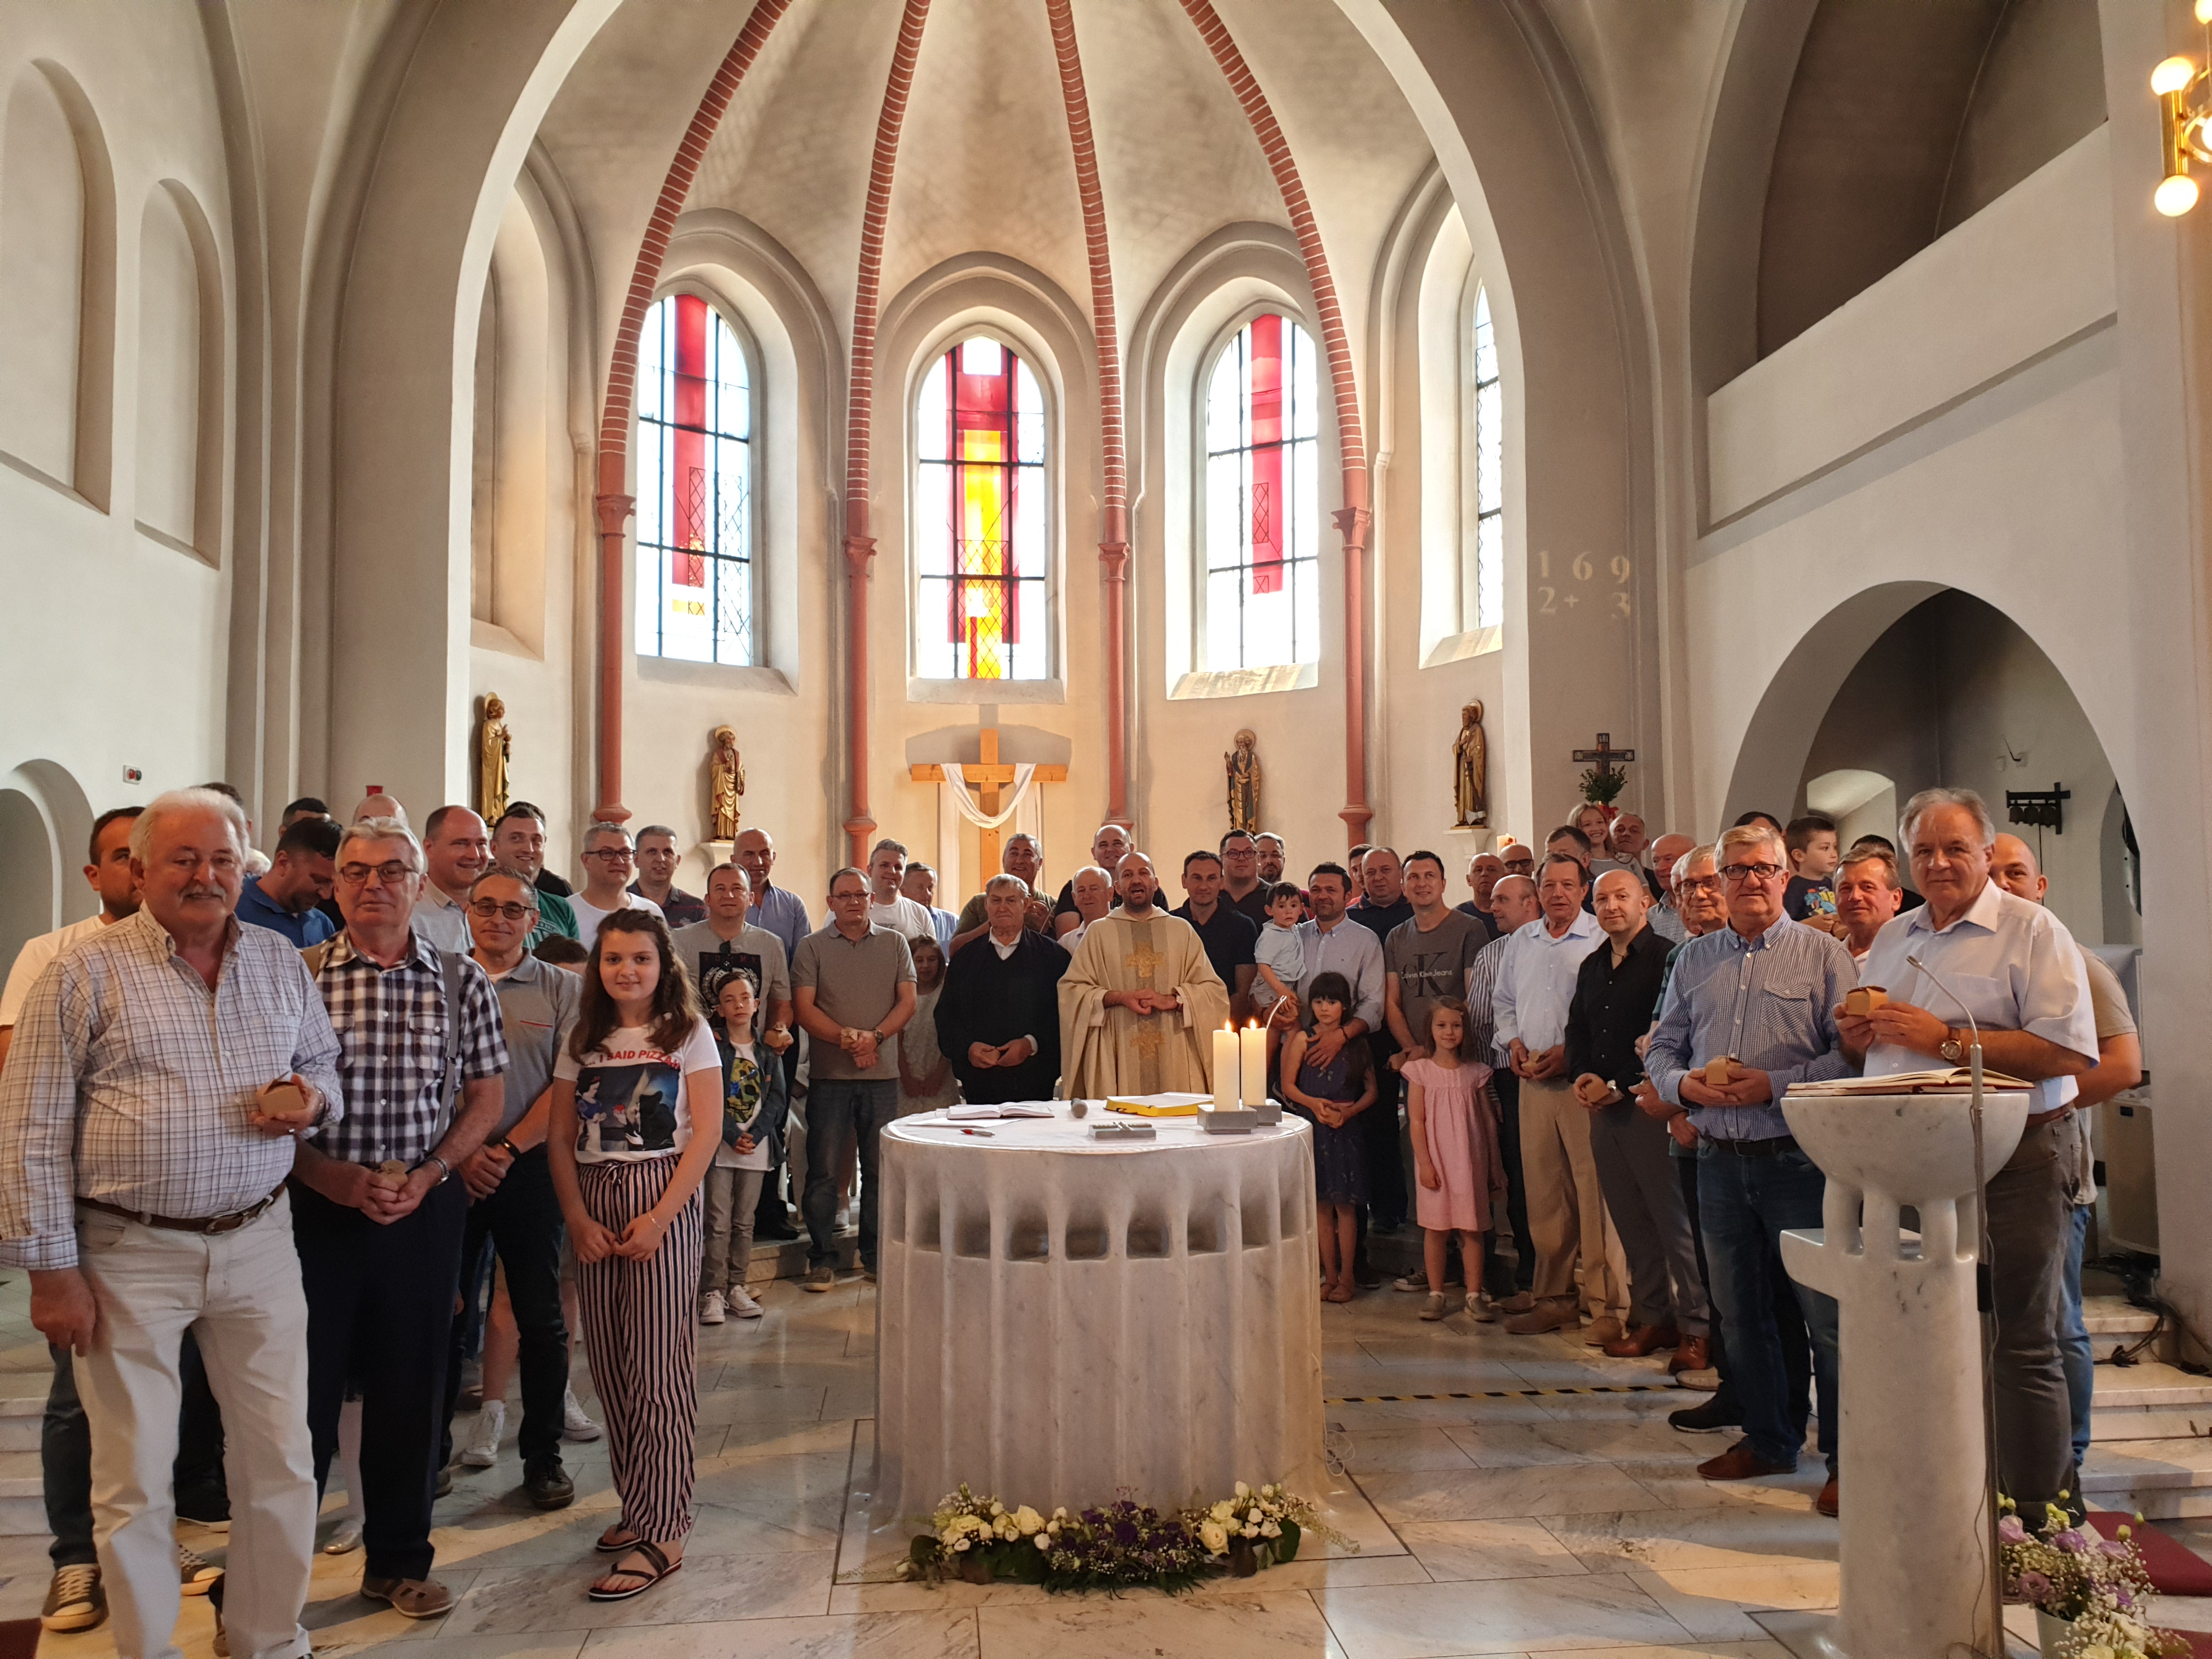 Hrvatske katoličke zajednice Nagold, Freudenstadt i Calw svečano proslavile Dan očeva (Vatertag)